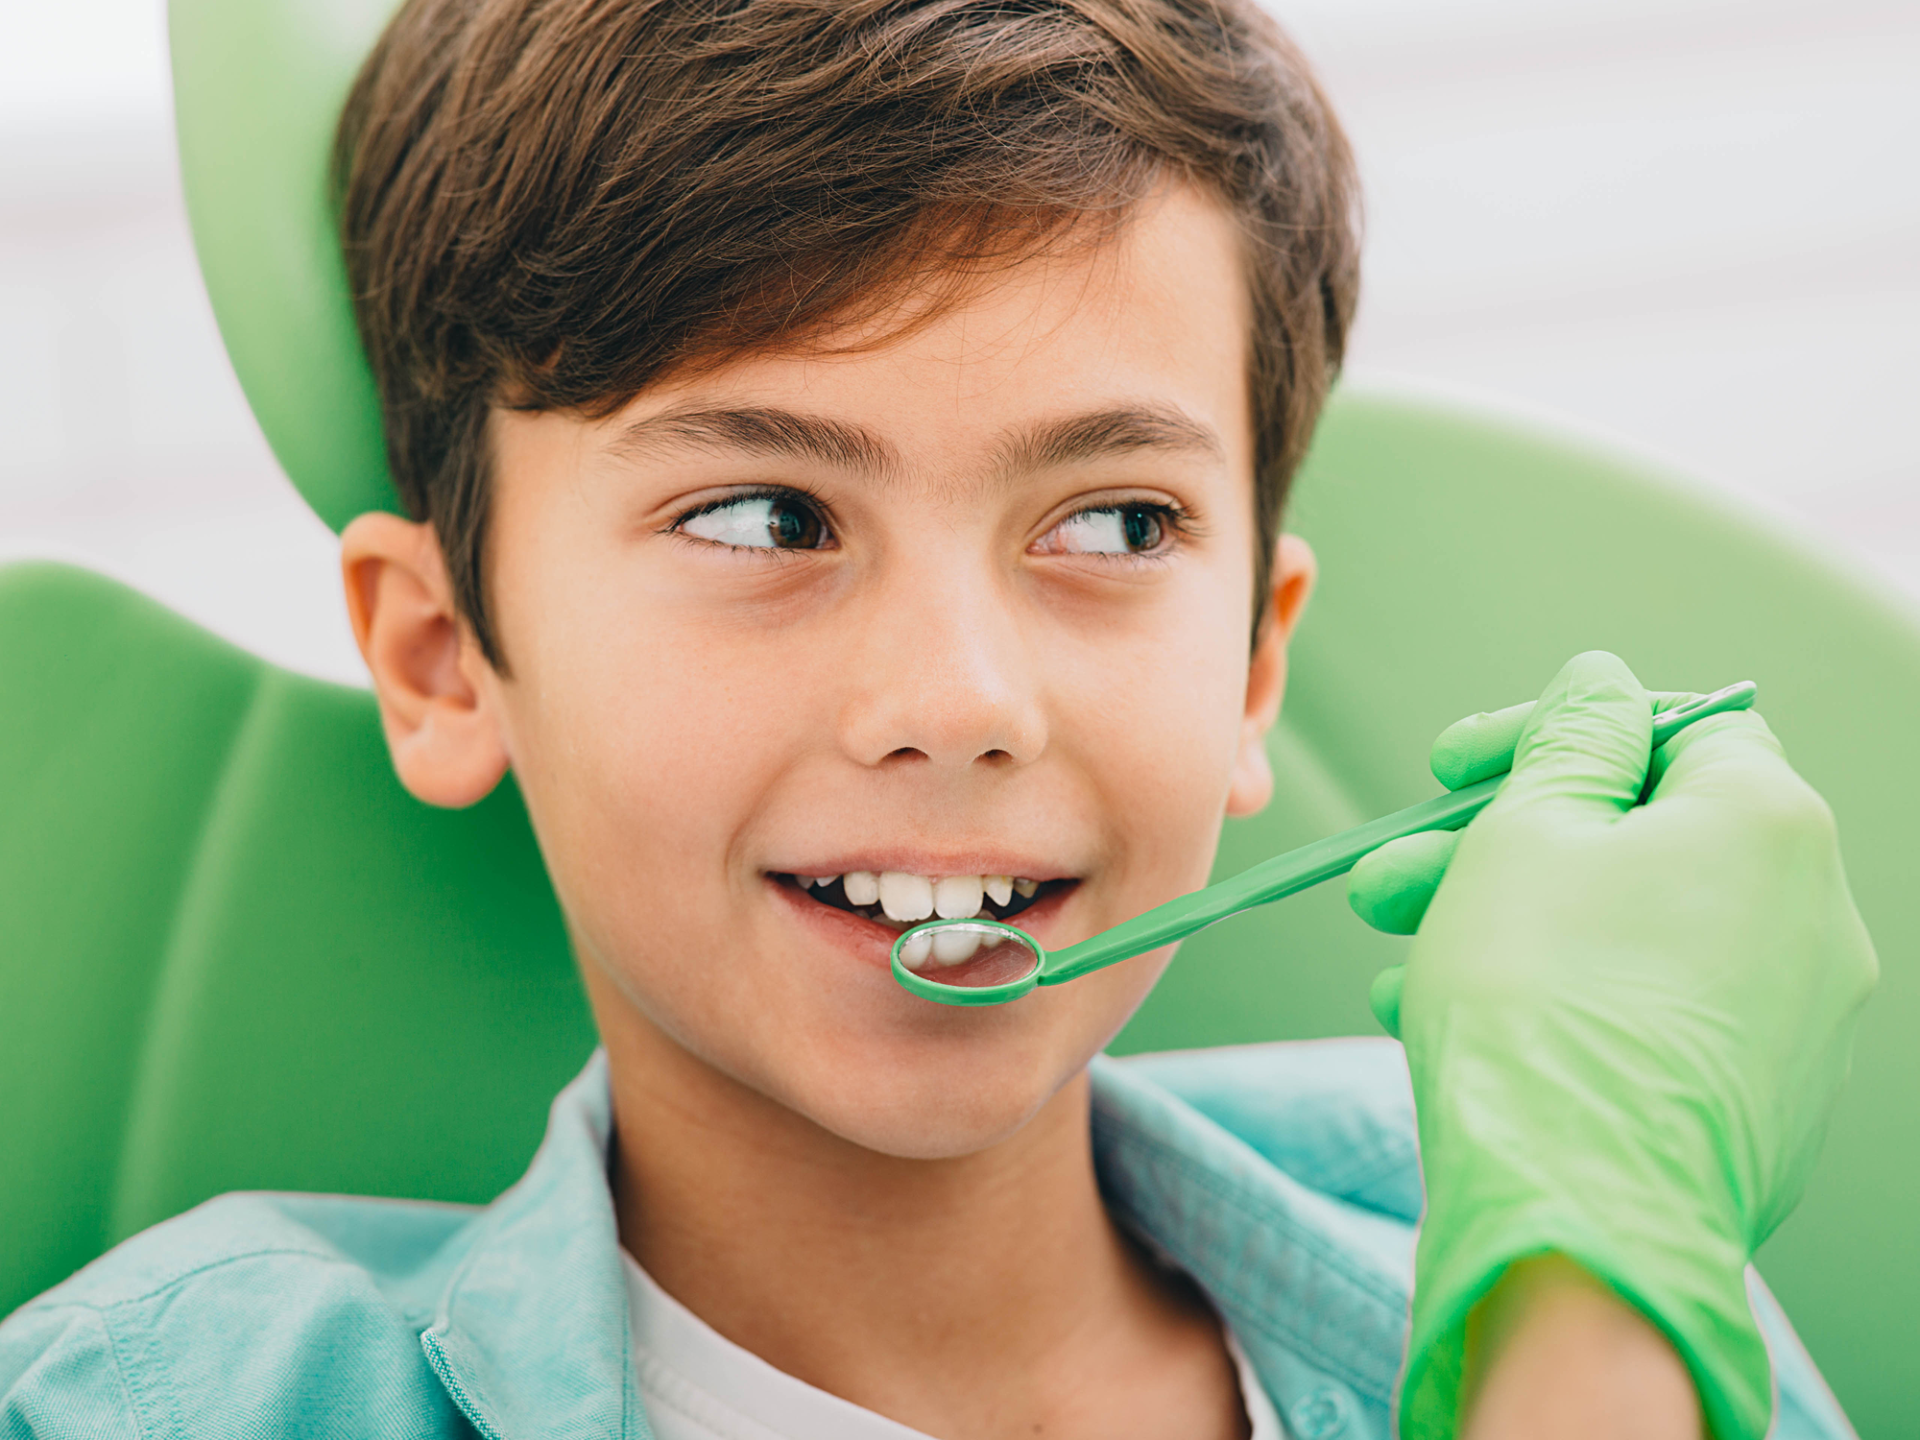 At What Age Should Kids Start Pediatric Dental Exams?